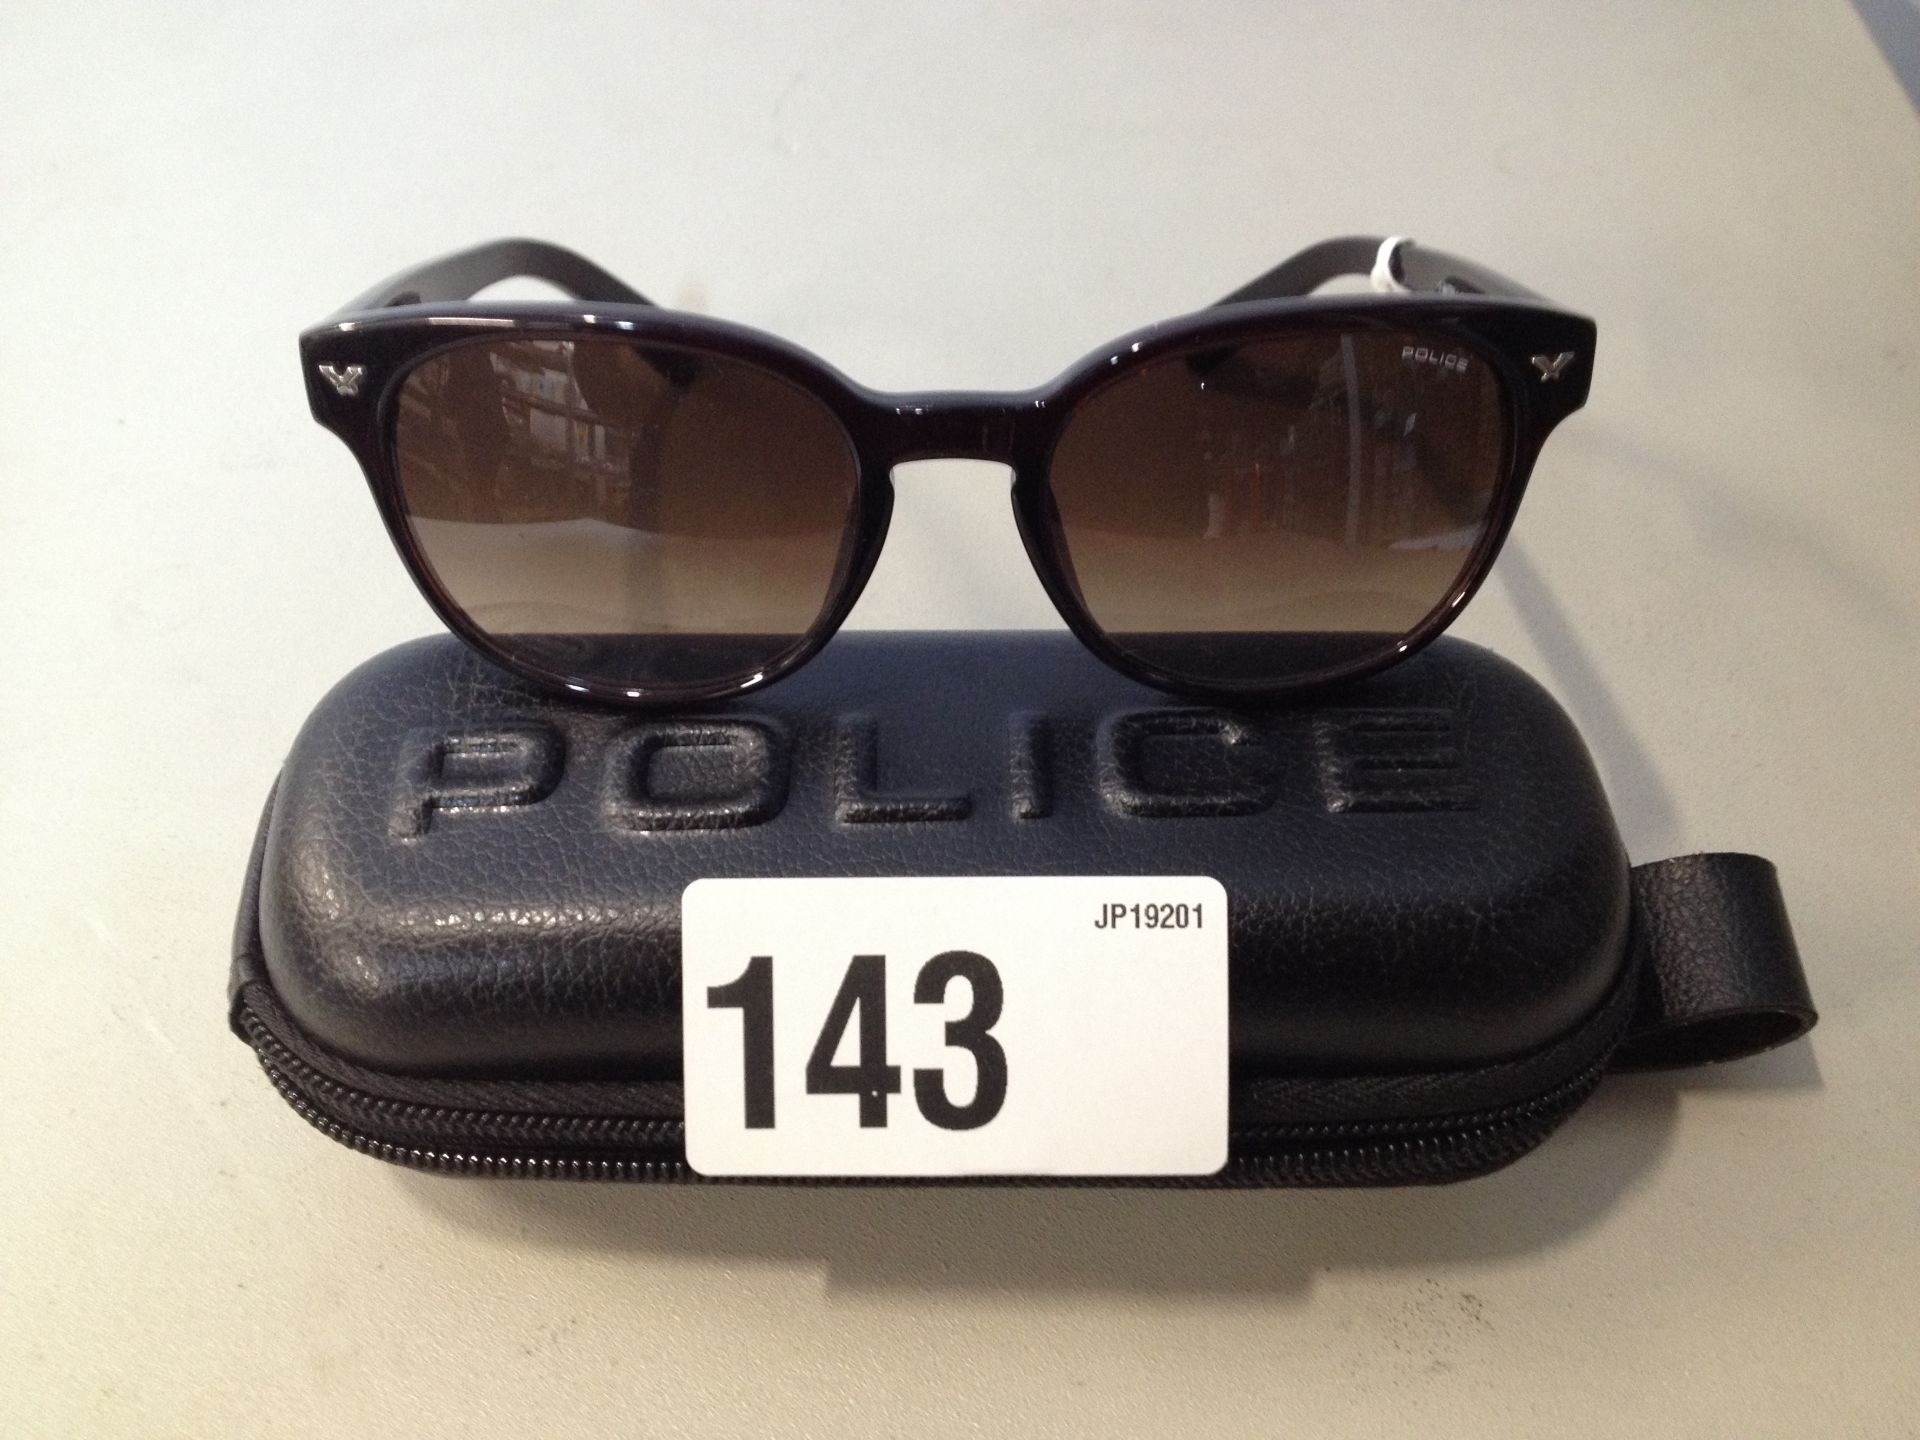 1 X Police Sunglasses